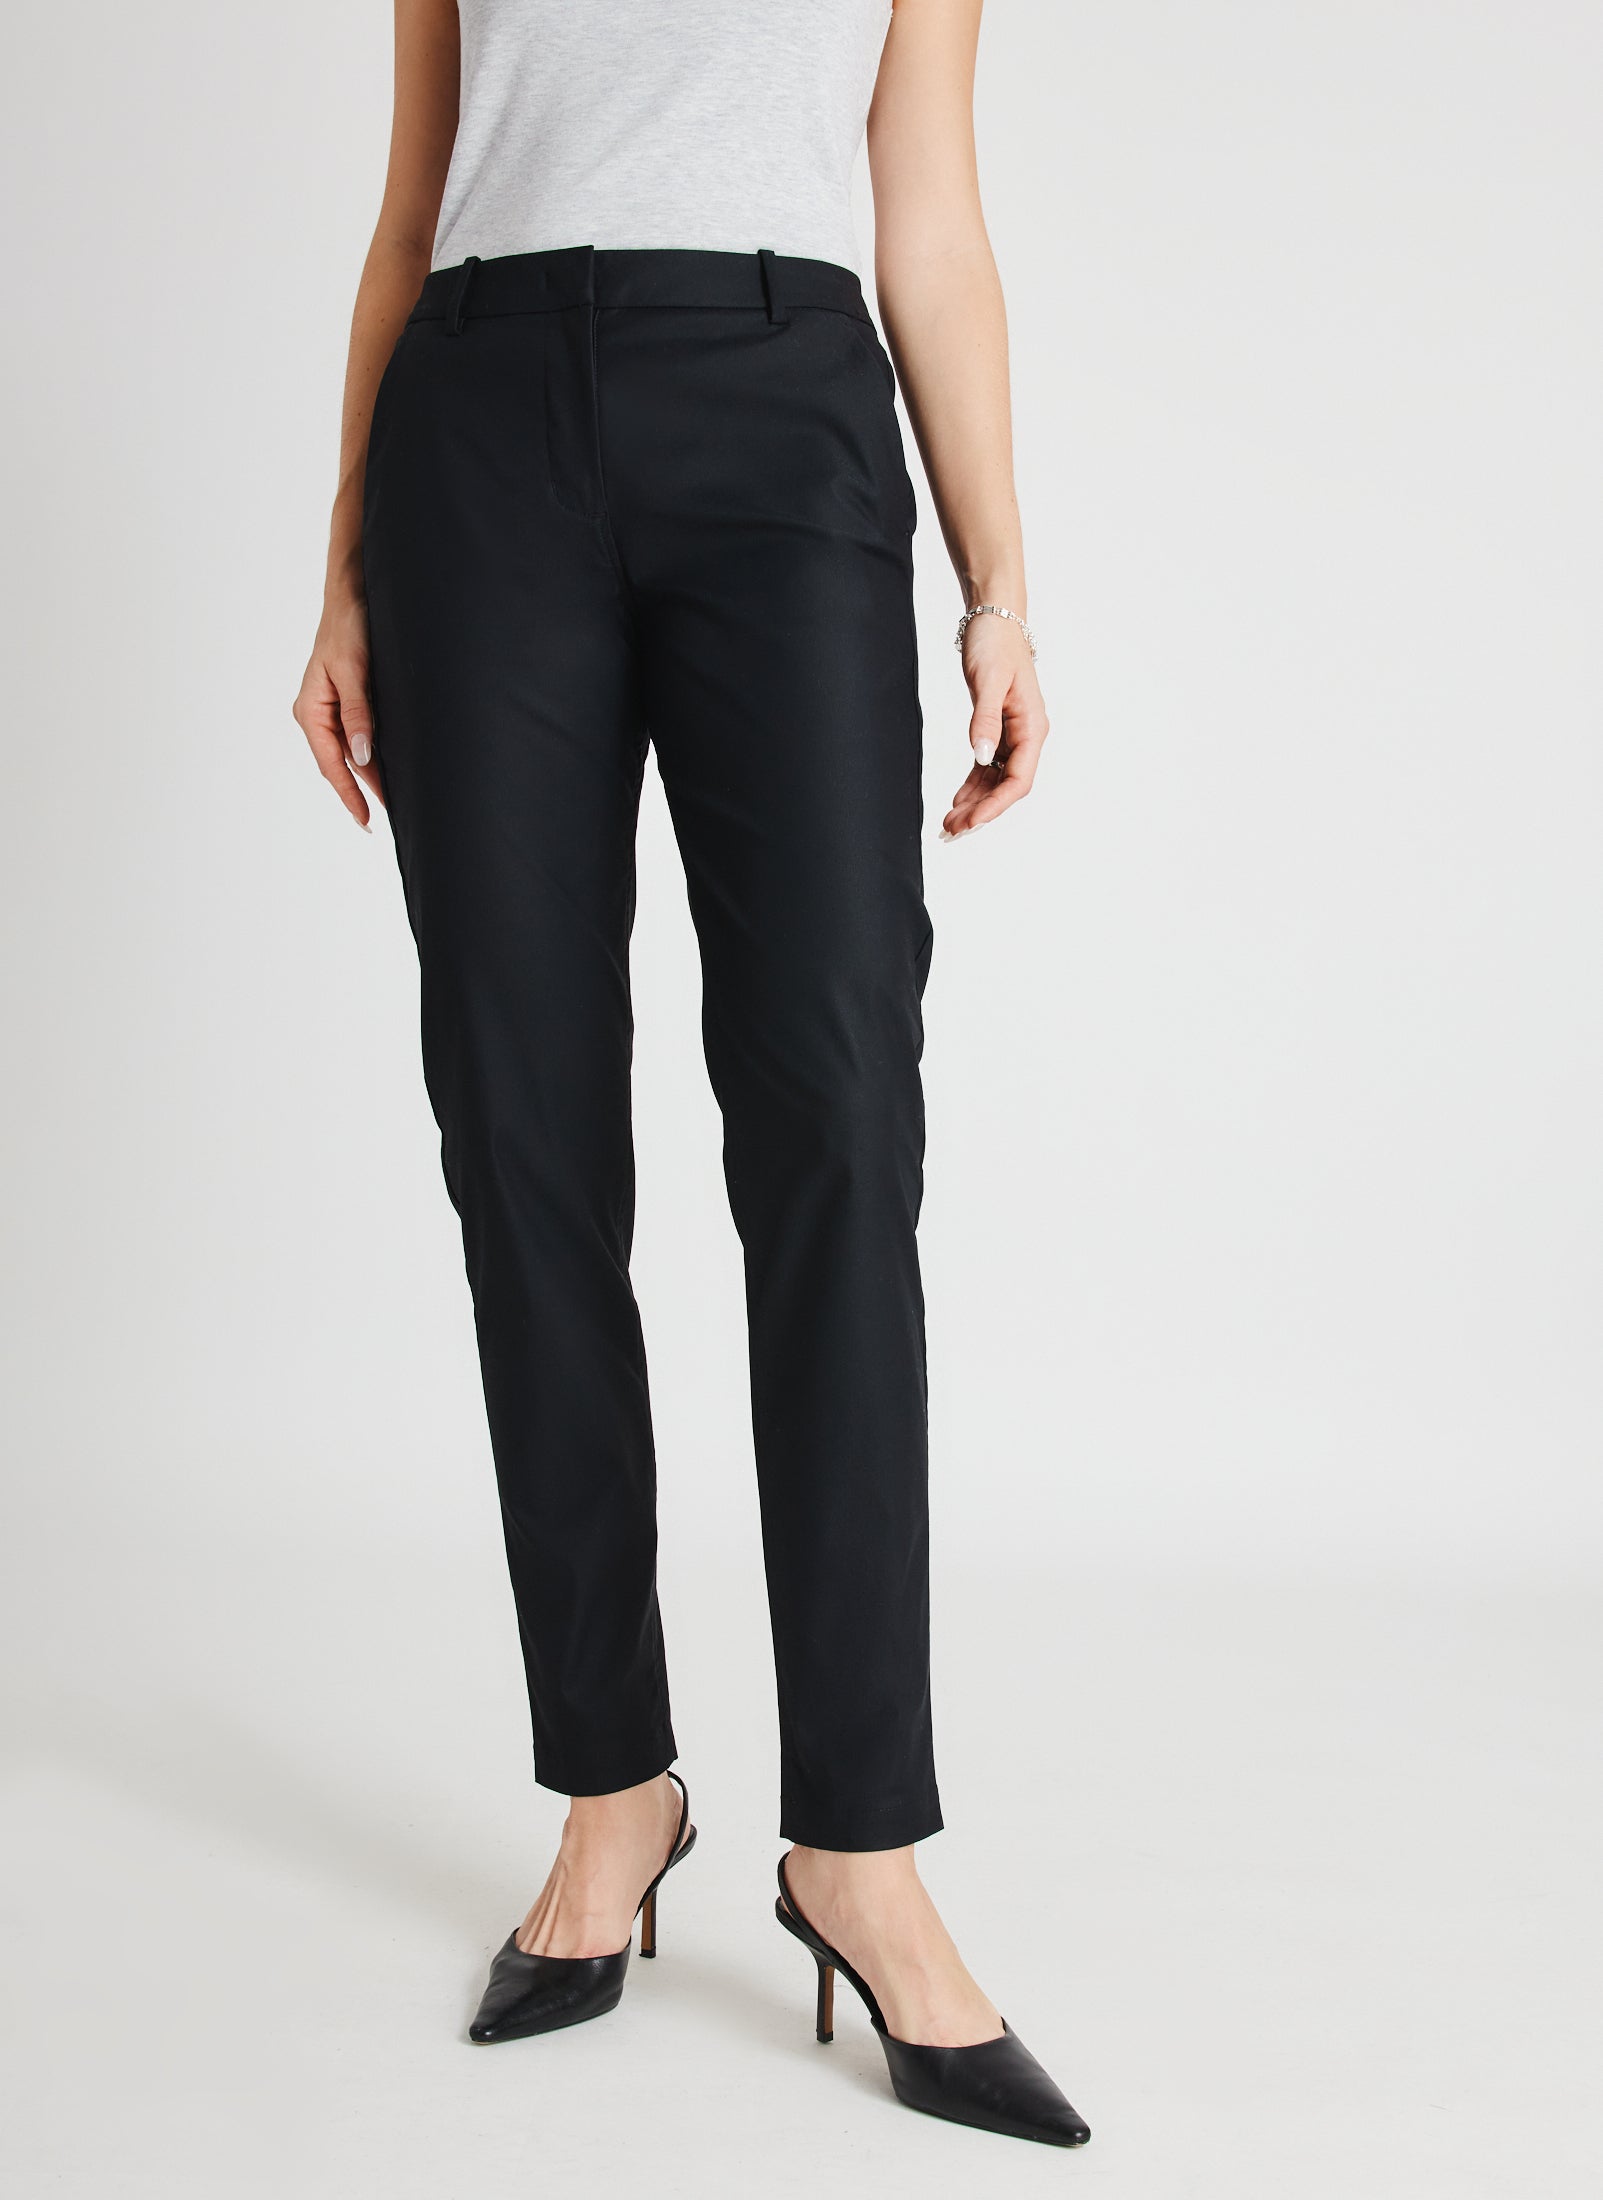 Organic Cotton Women's Drawstring Pants with Patch Pockets ( Black